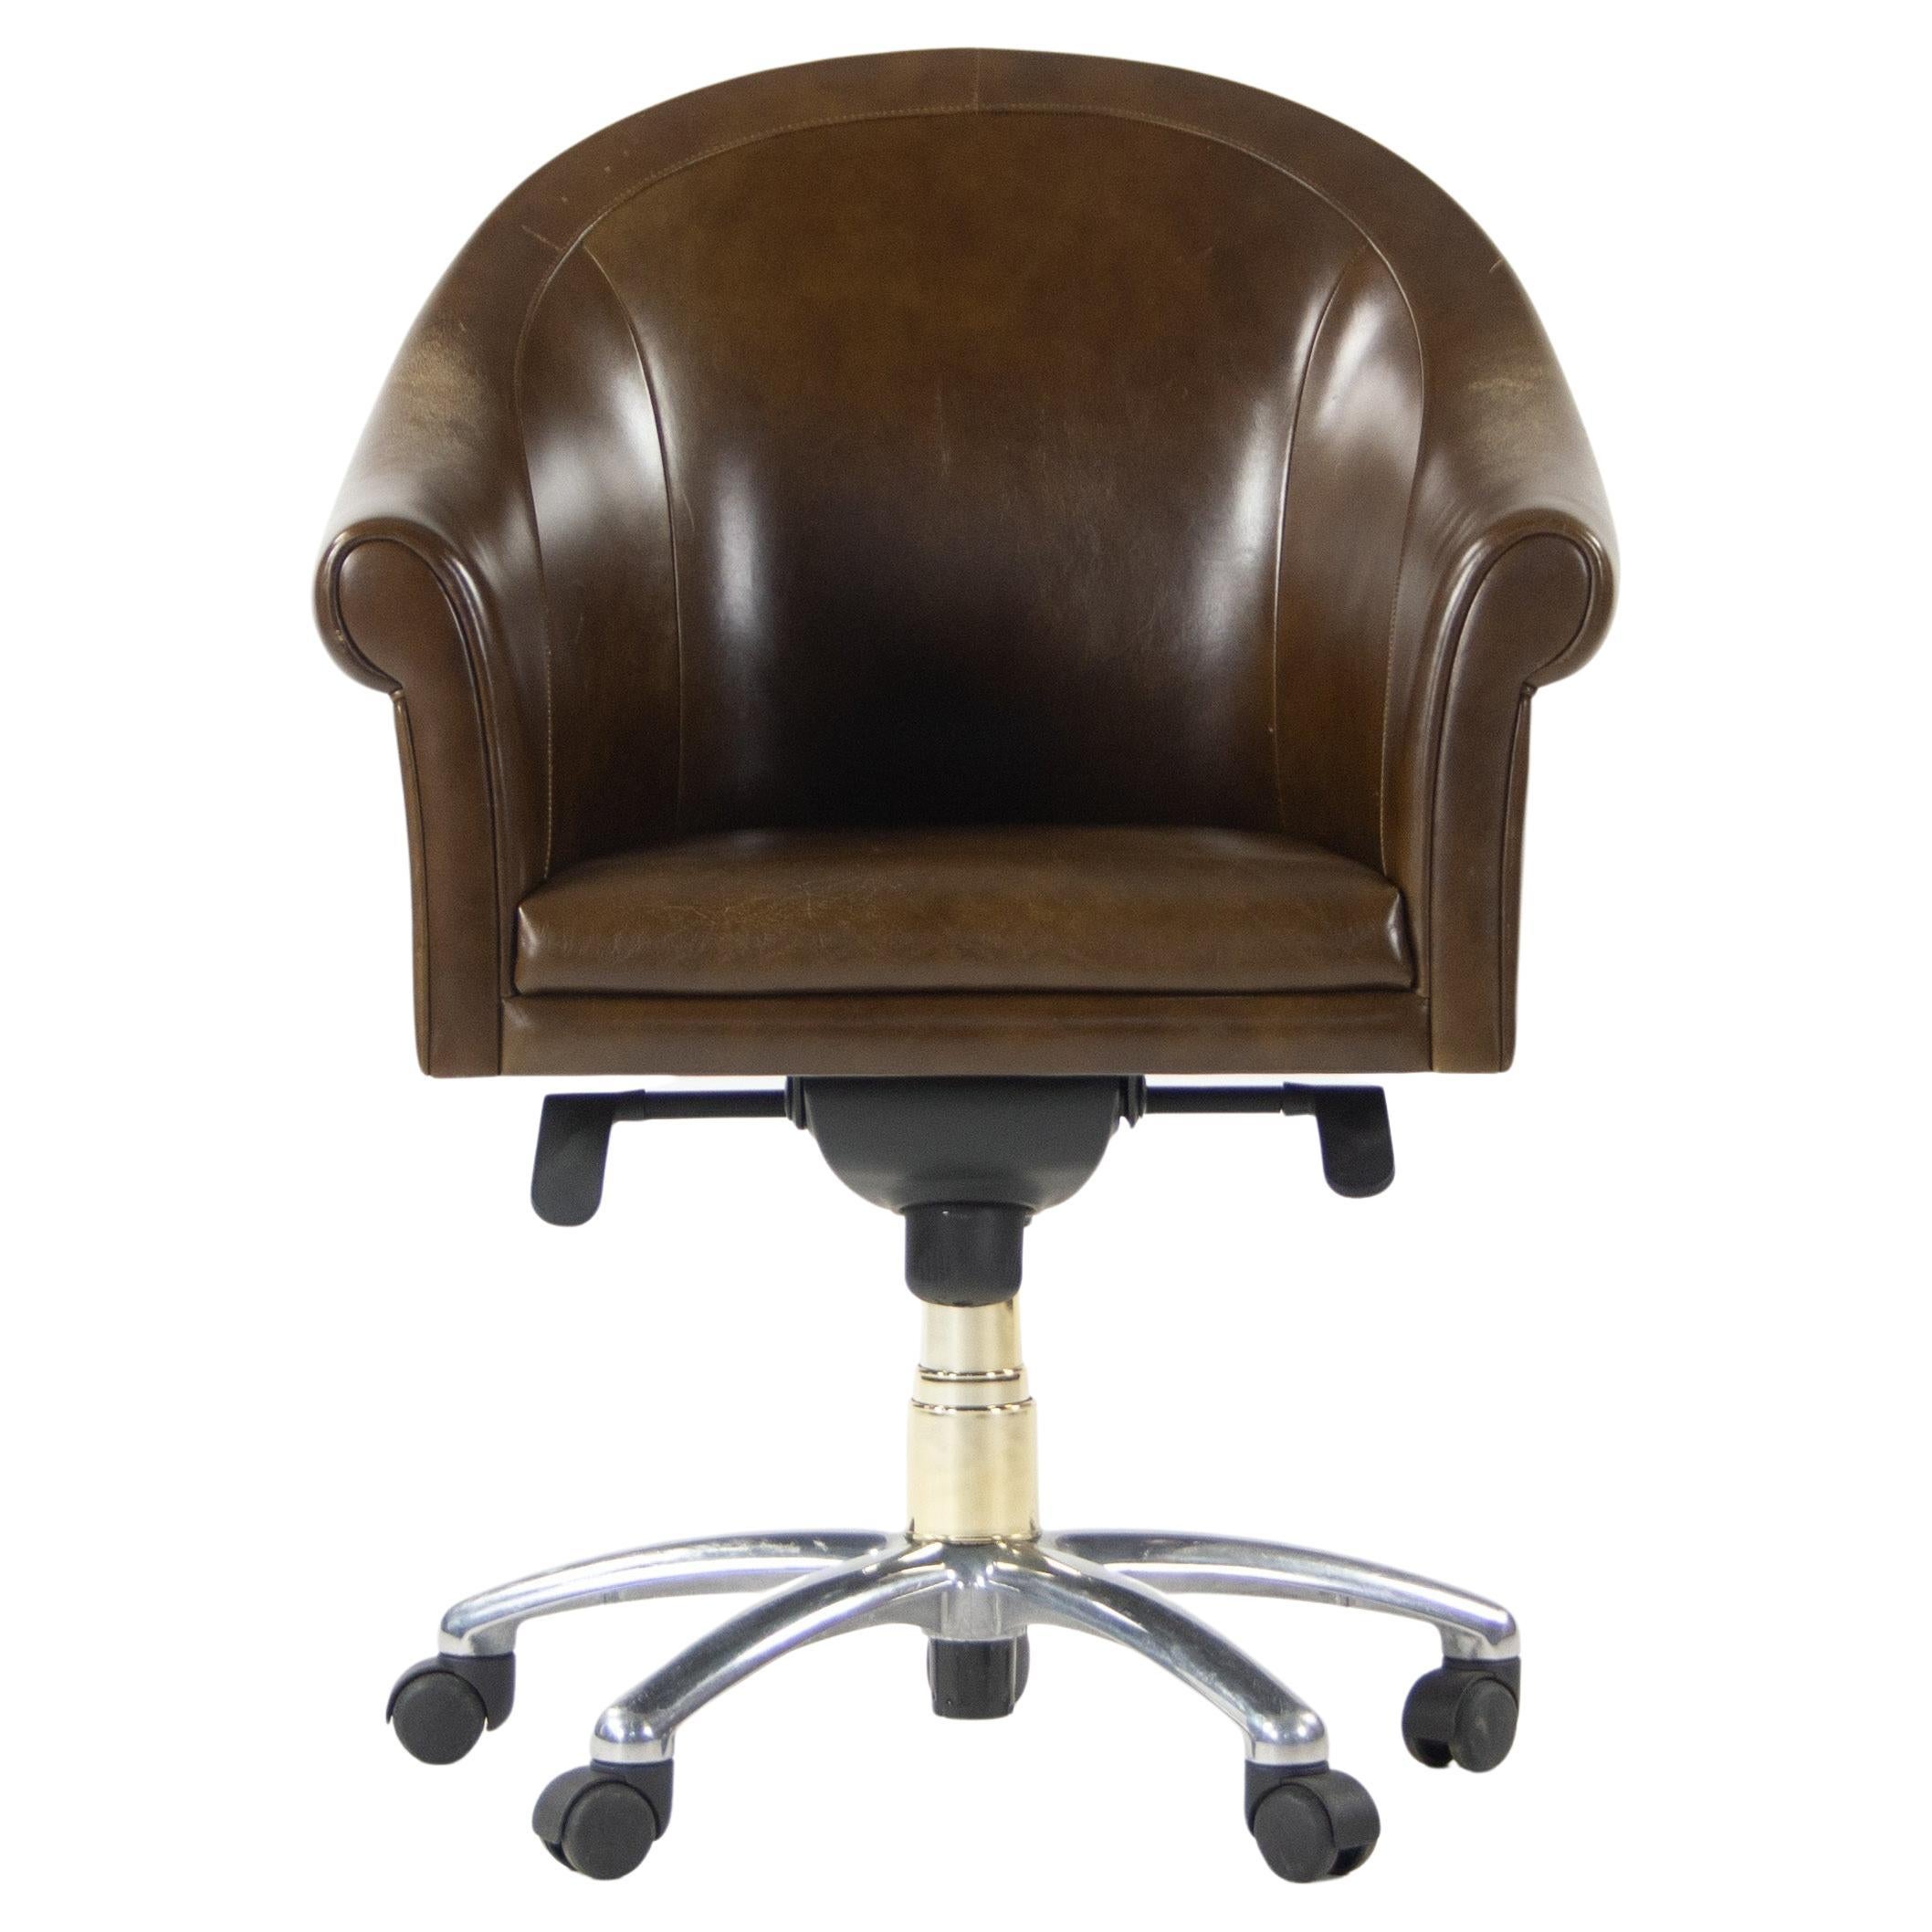 Poltrona Frau Brown Leather Luca Scacchetti Sinan Office Desk Chair en vente